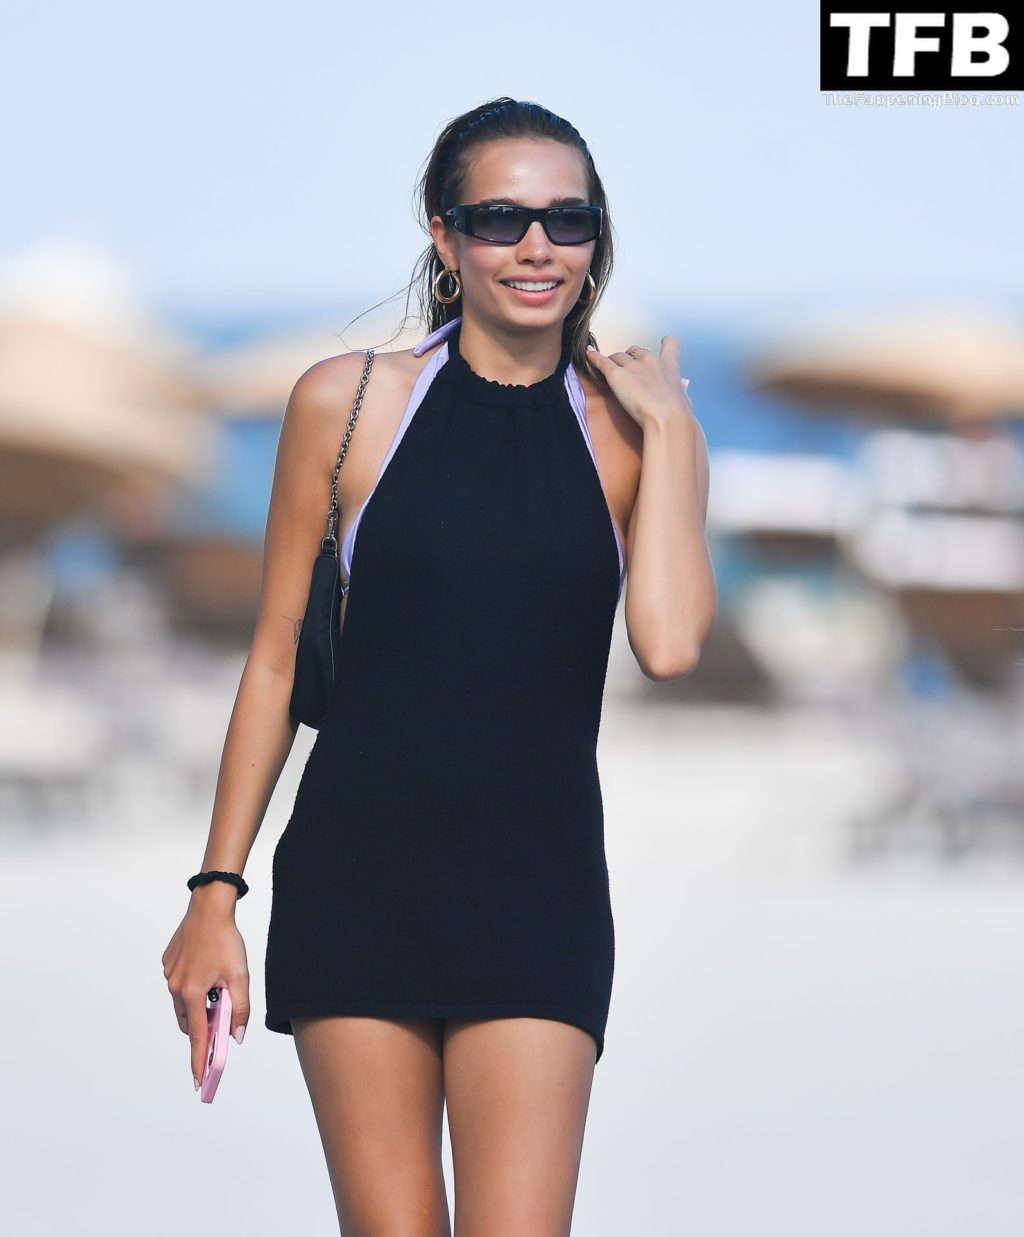 Leggy Hana Cross Hits the Beach in Miami Beach (26 Photos)